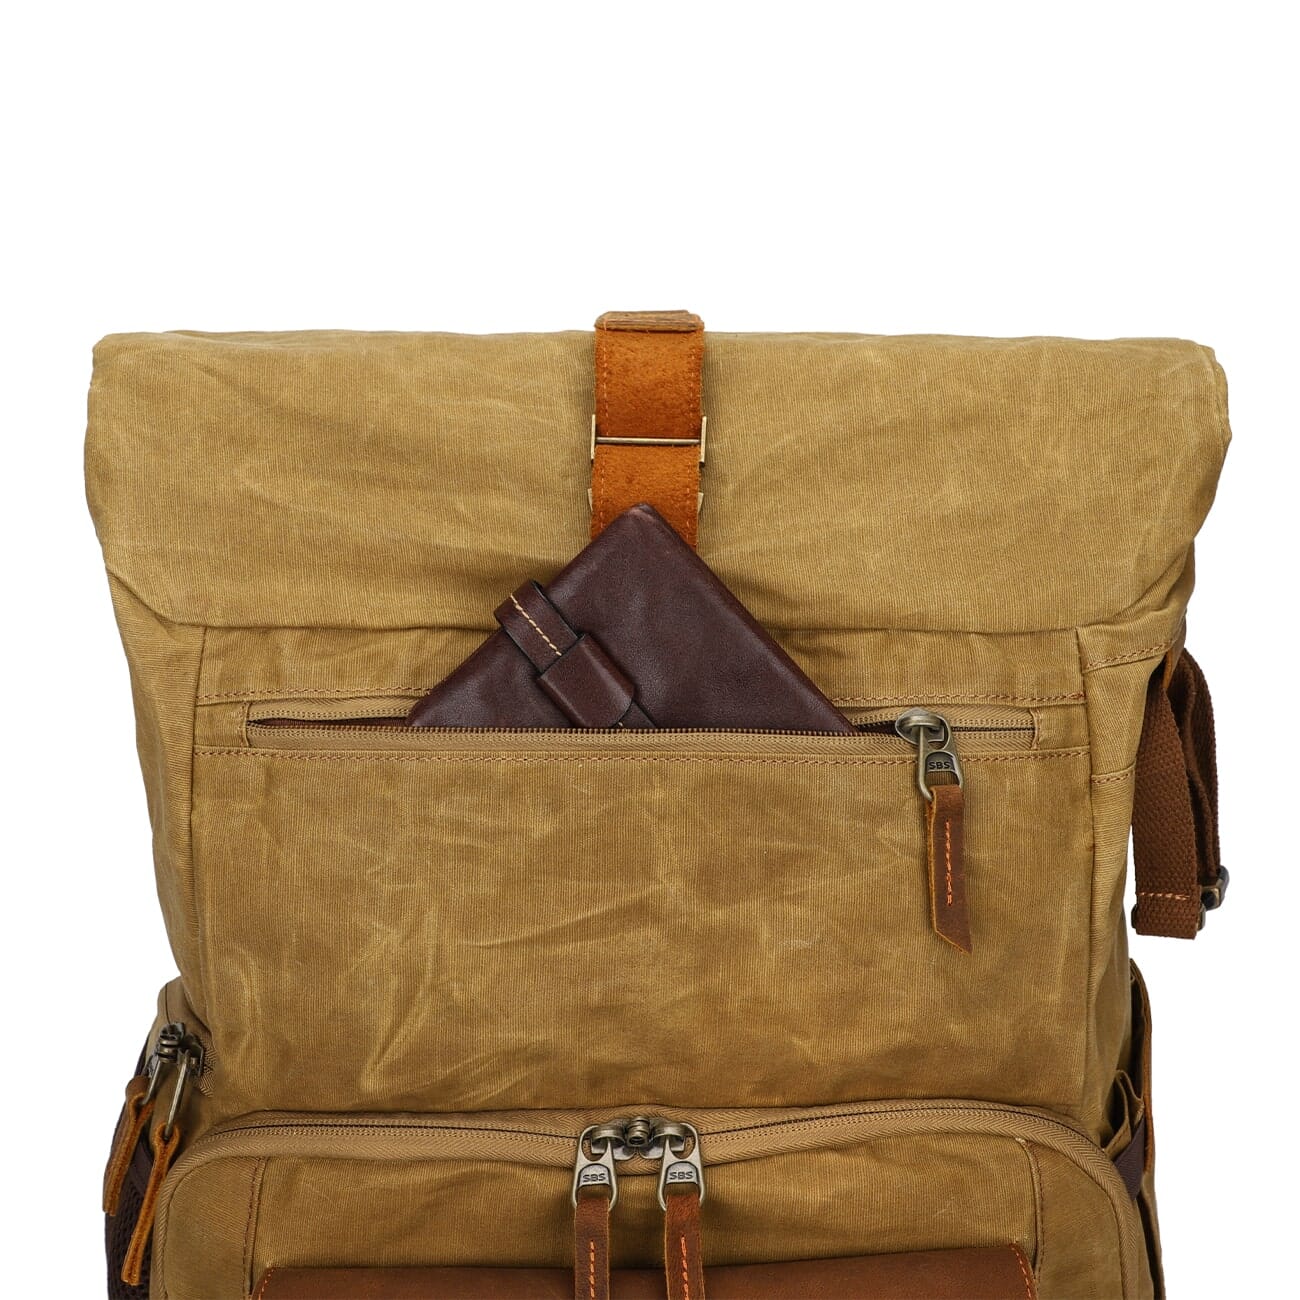 Vintage Style Camera Backpack | KILIMANDJARO